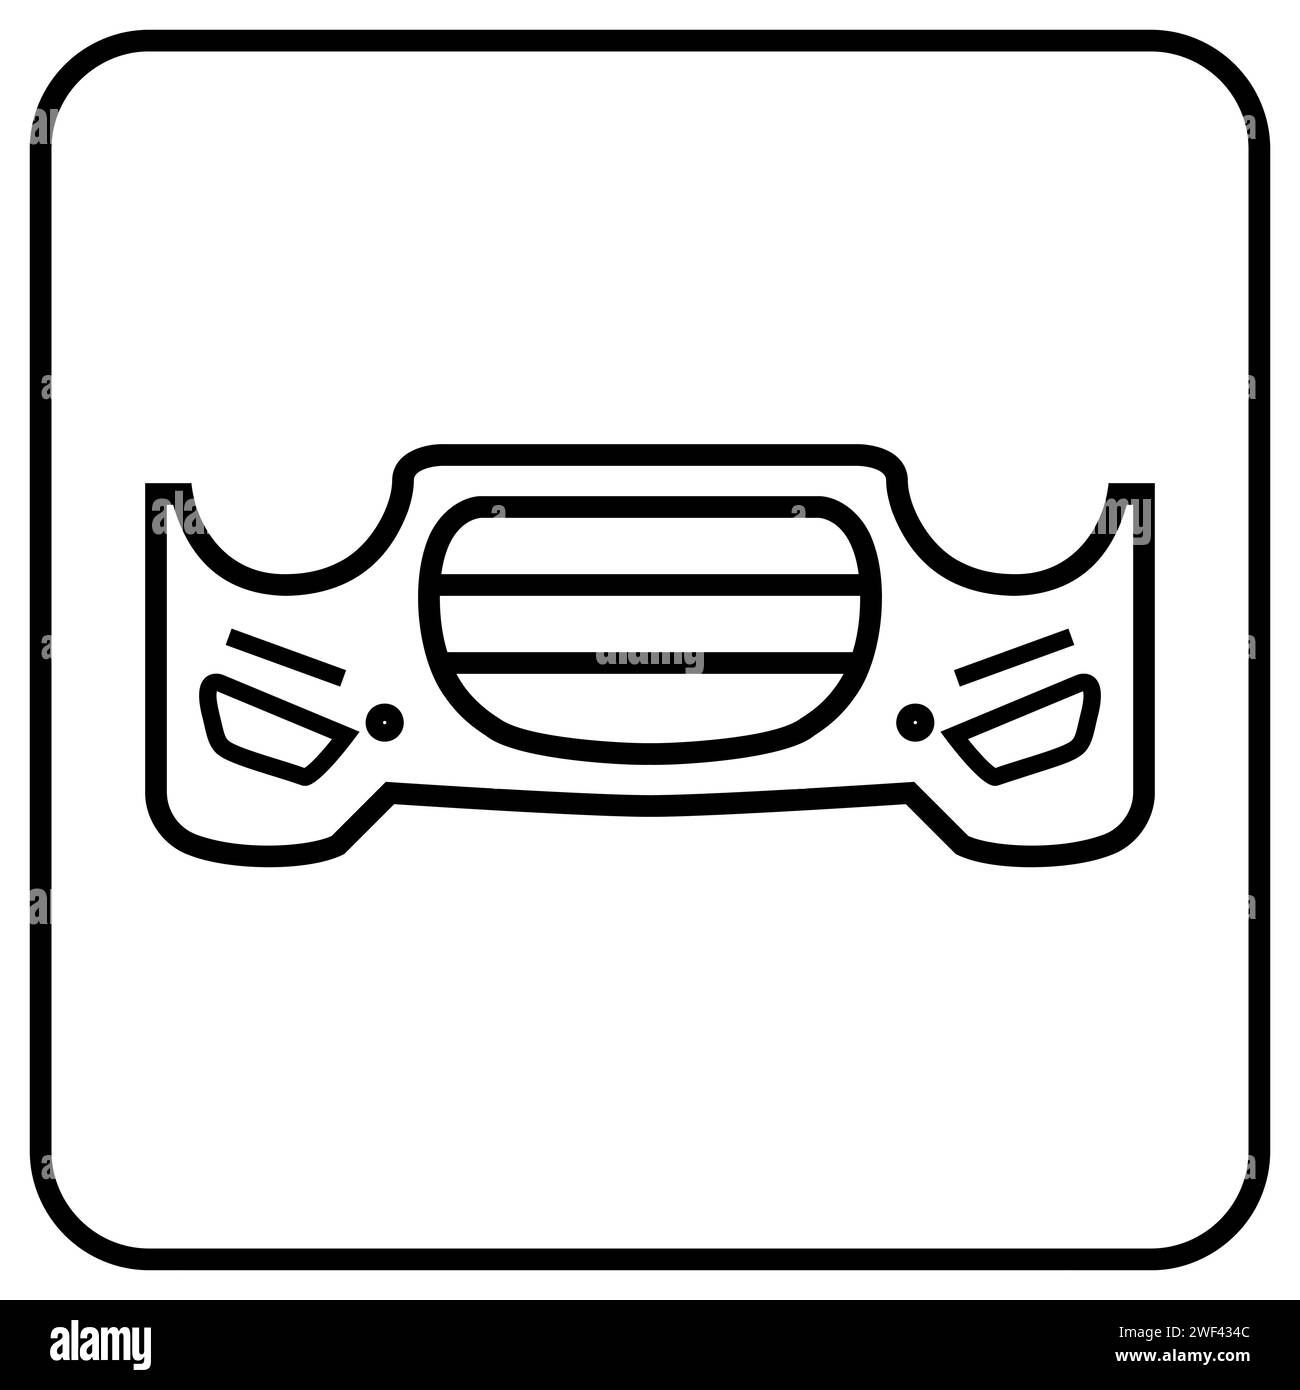 car plastics vector icon, for app or website button Stock Vector